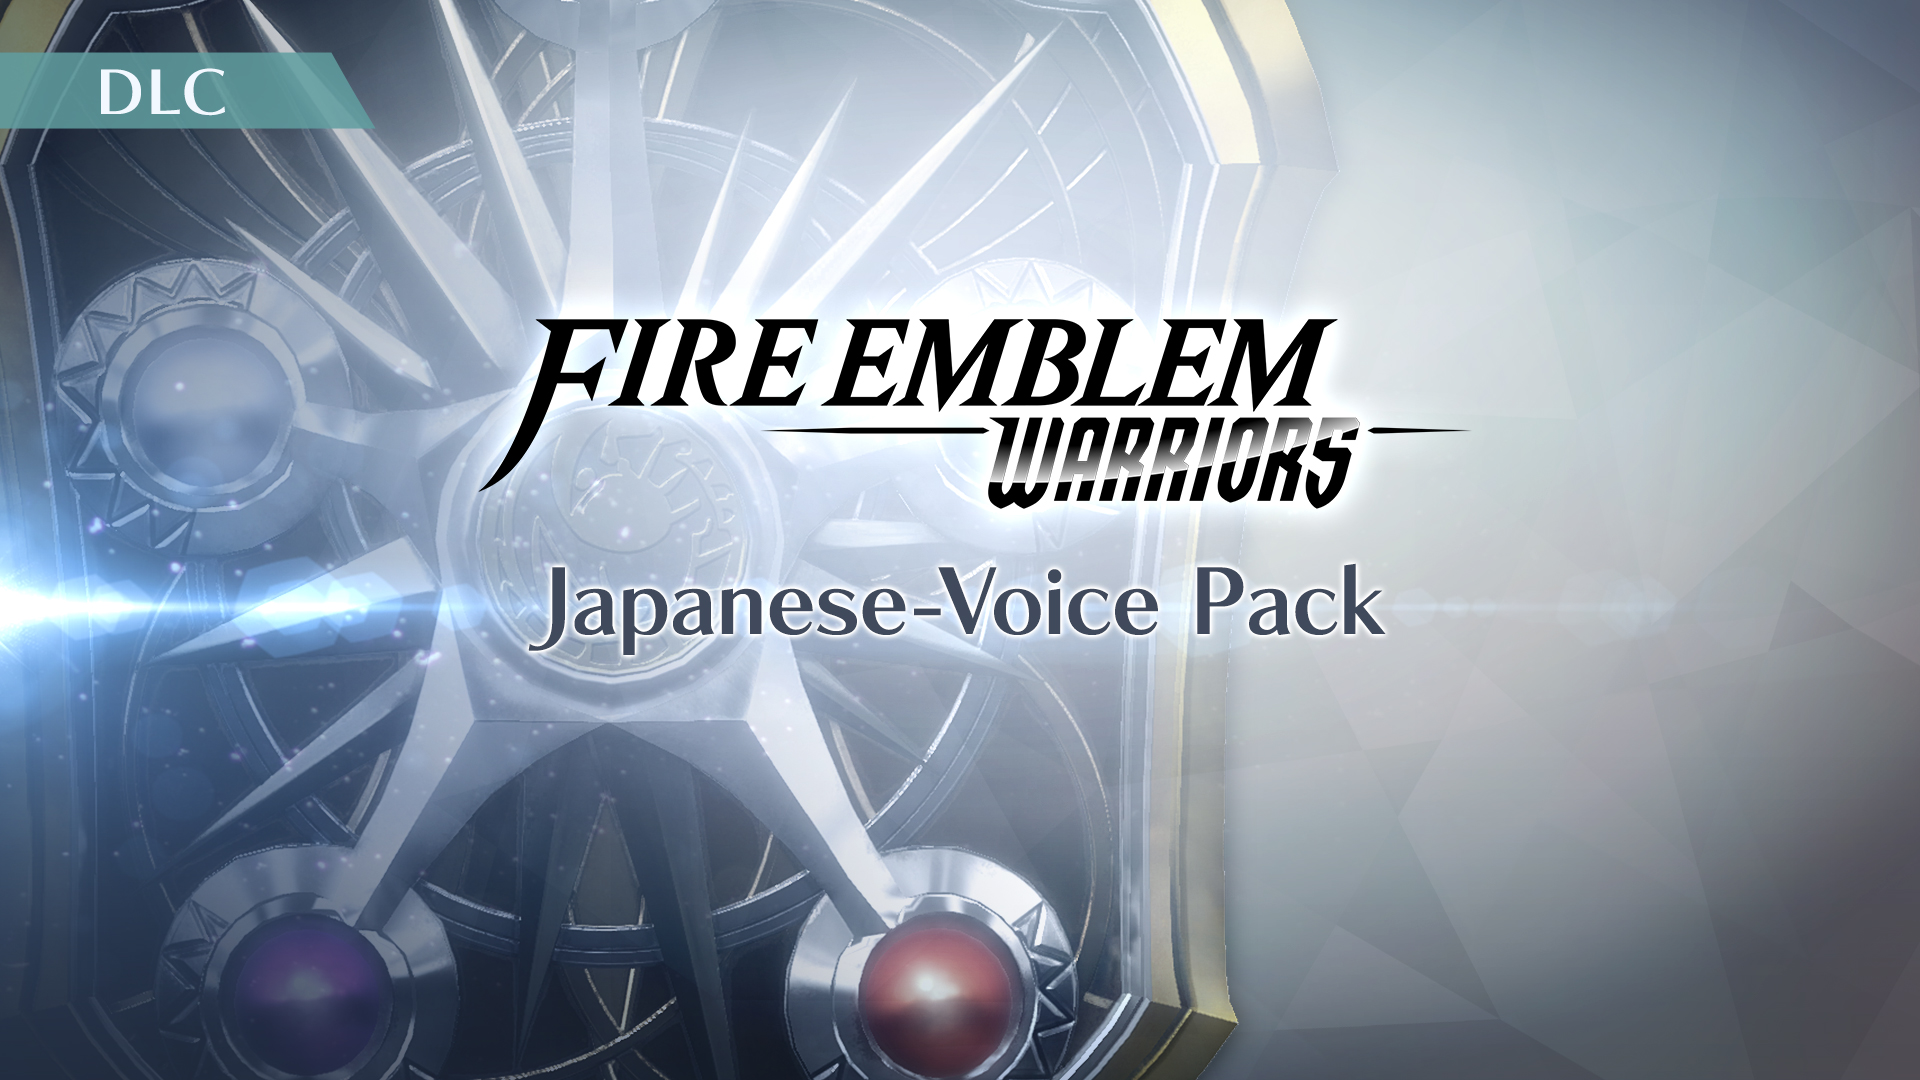 Japanese-Voice Pack